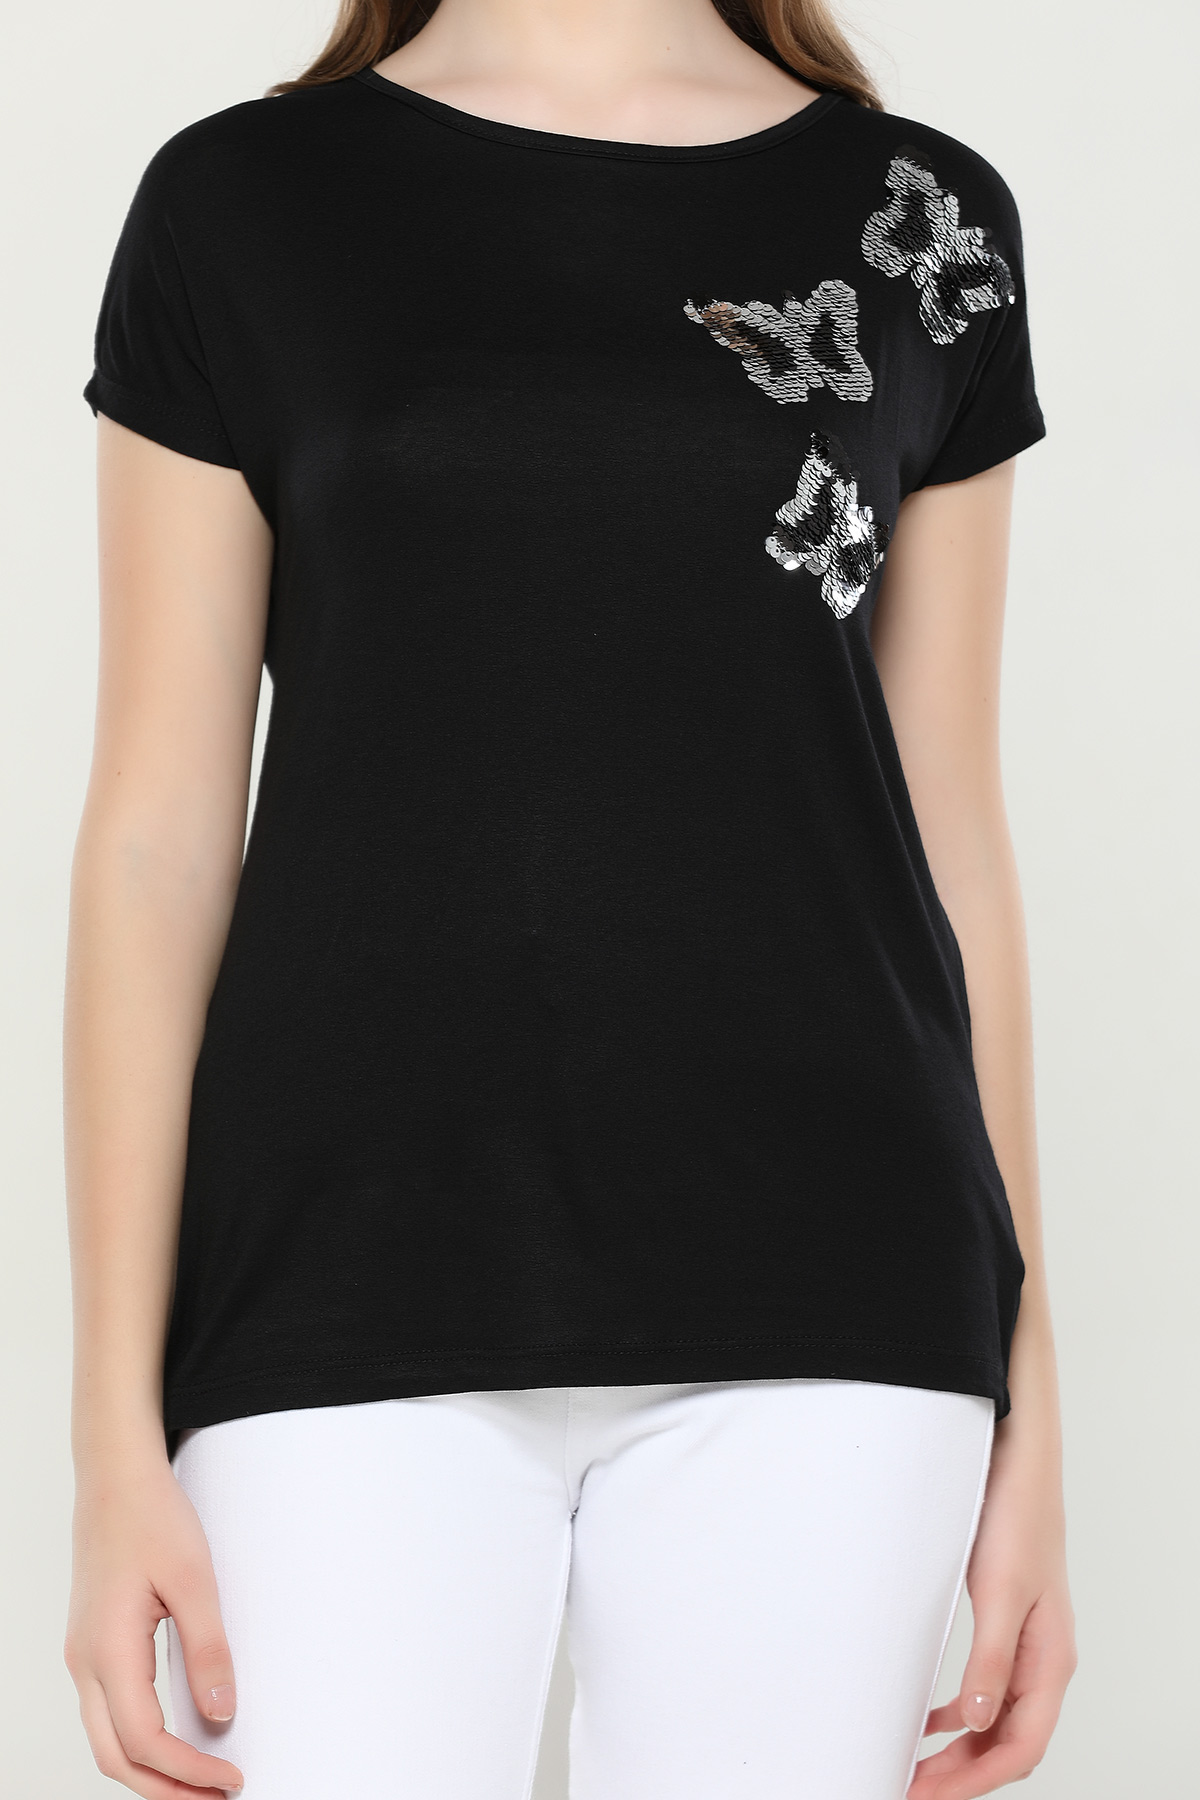 Siyah Pullu Kadın T-shirt 349343- tozlu.com